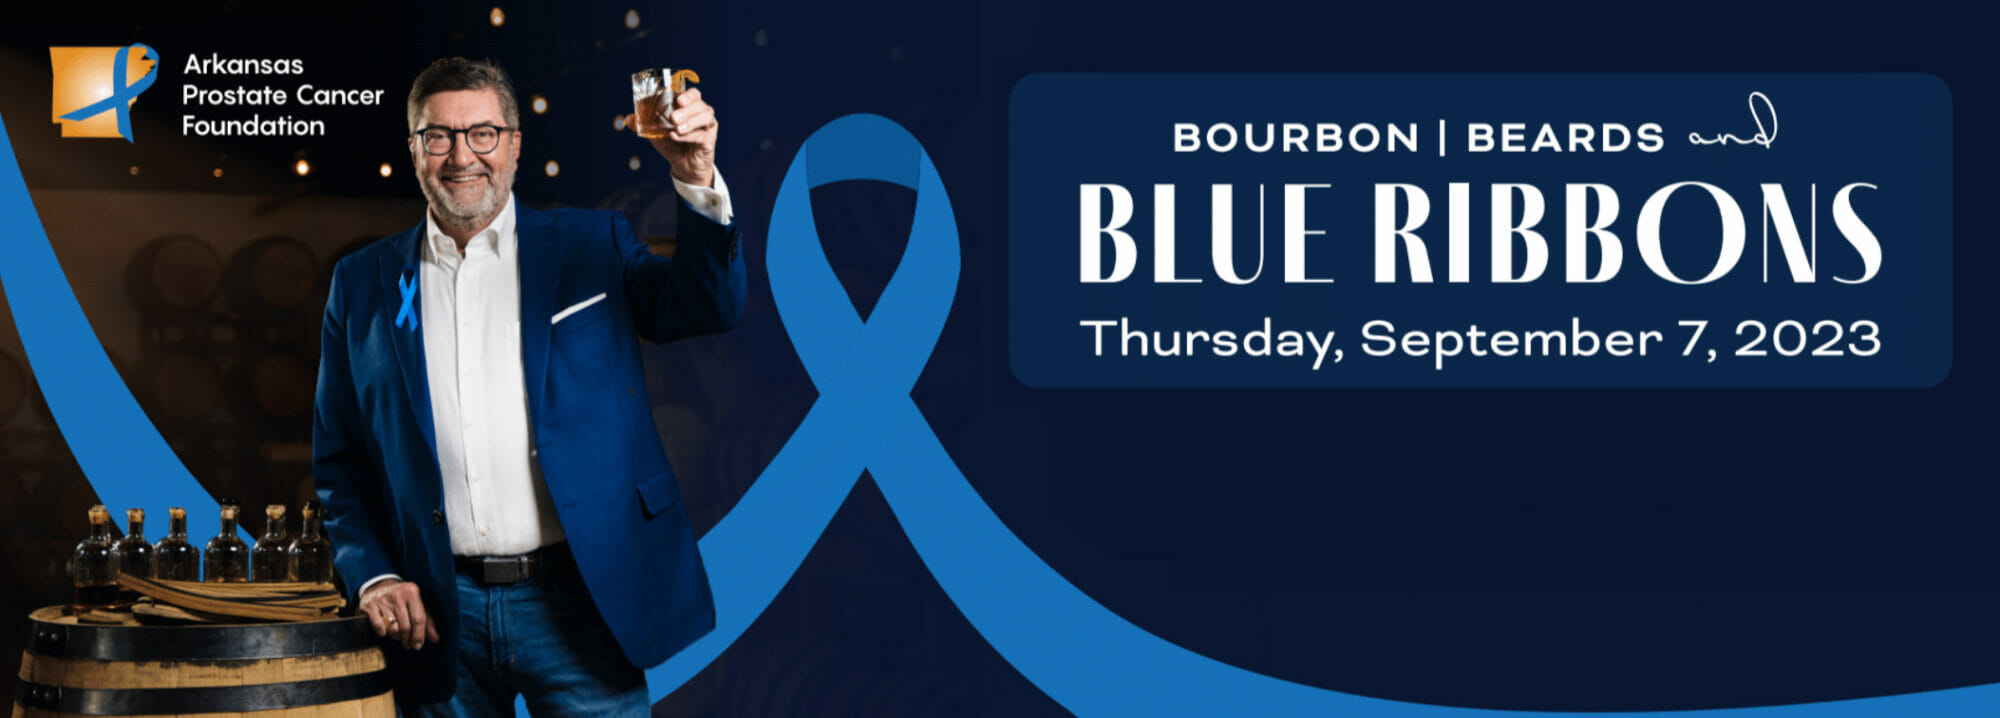 Bourbon Beards & Blue Ribbons 2023